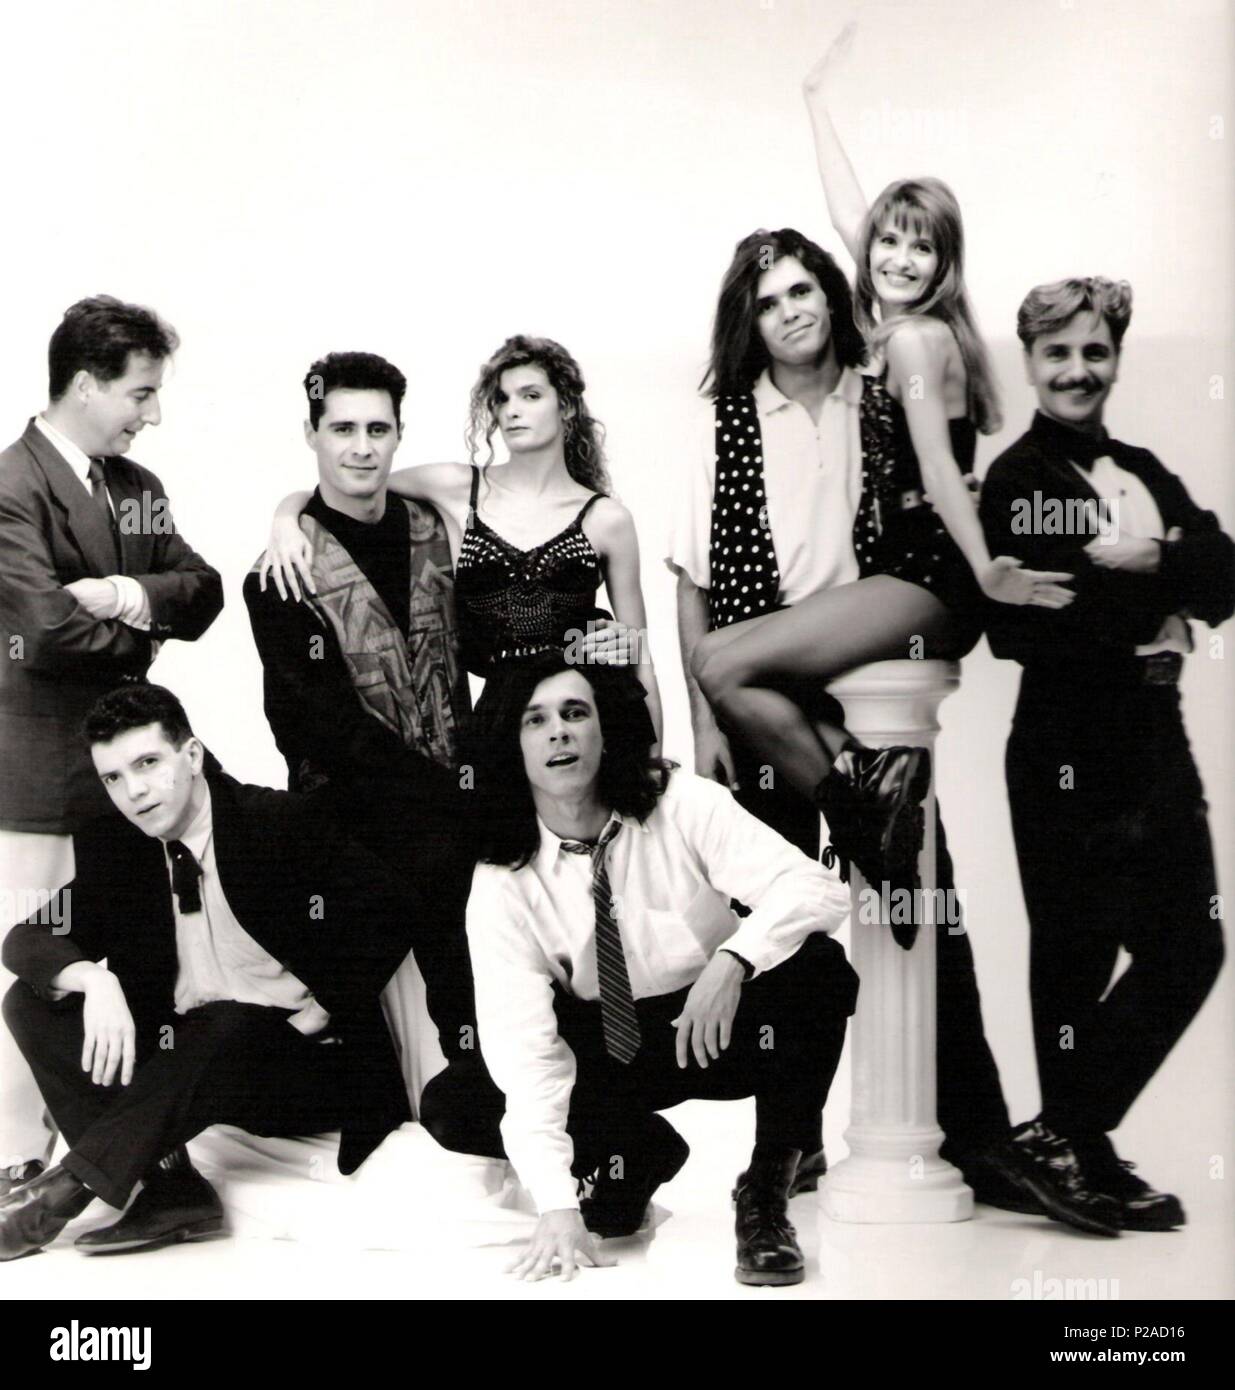 La Década Prodigiosa, un grupo de música español nacido en 1985 de la mano de Javier de Juan, Manel Santisteban y Manuel Aguilar. (LadecaDaprodigiosa©DJC). Stock Photo